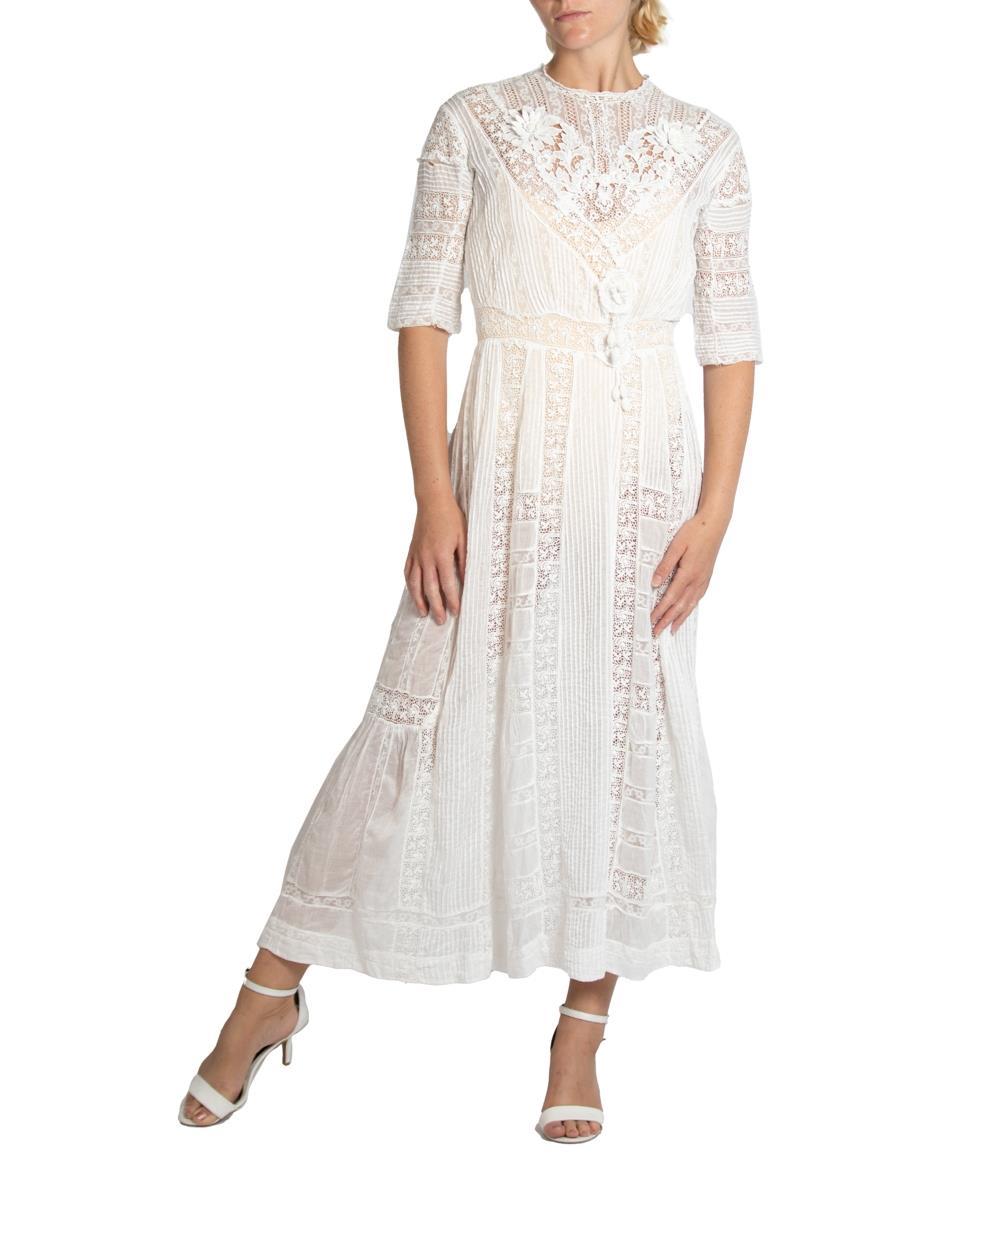 Edwardian White Cotton & Lace Tea Dress With 3-D Flowers For Sale 2